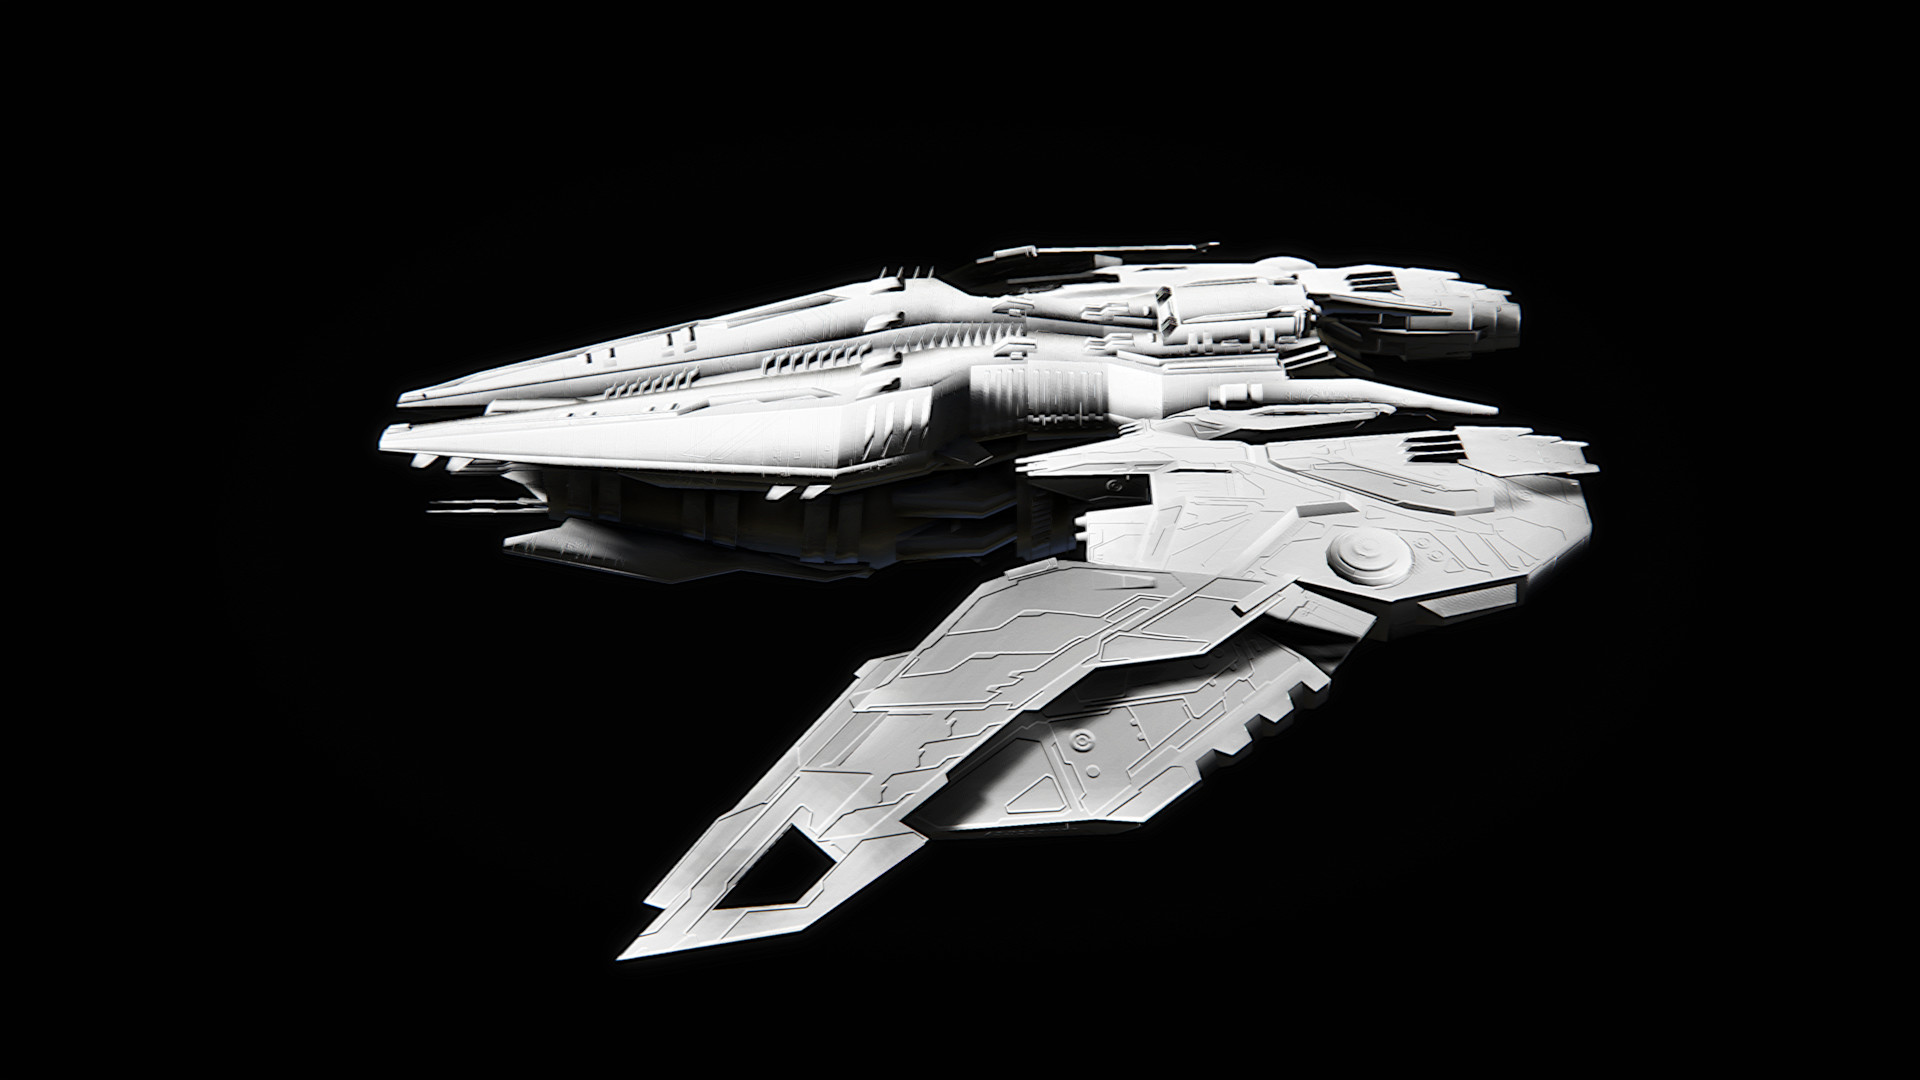 ArtStation - 3D Model Spaceship